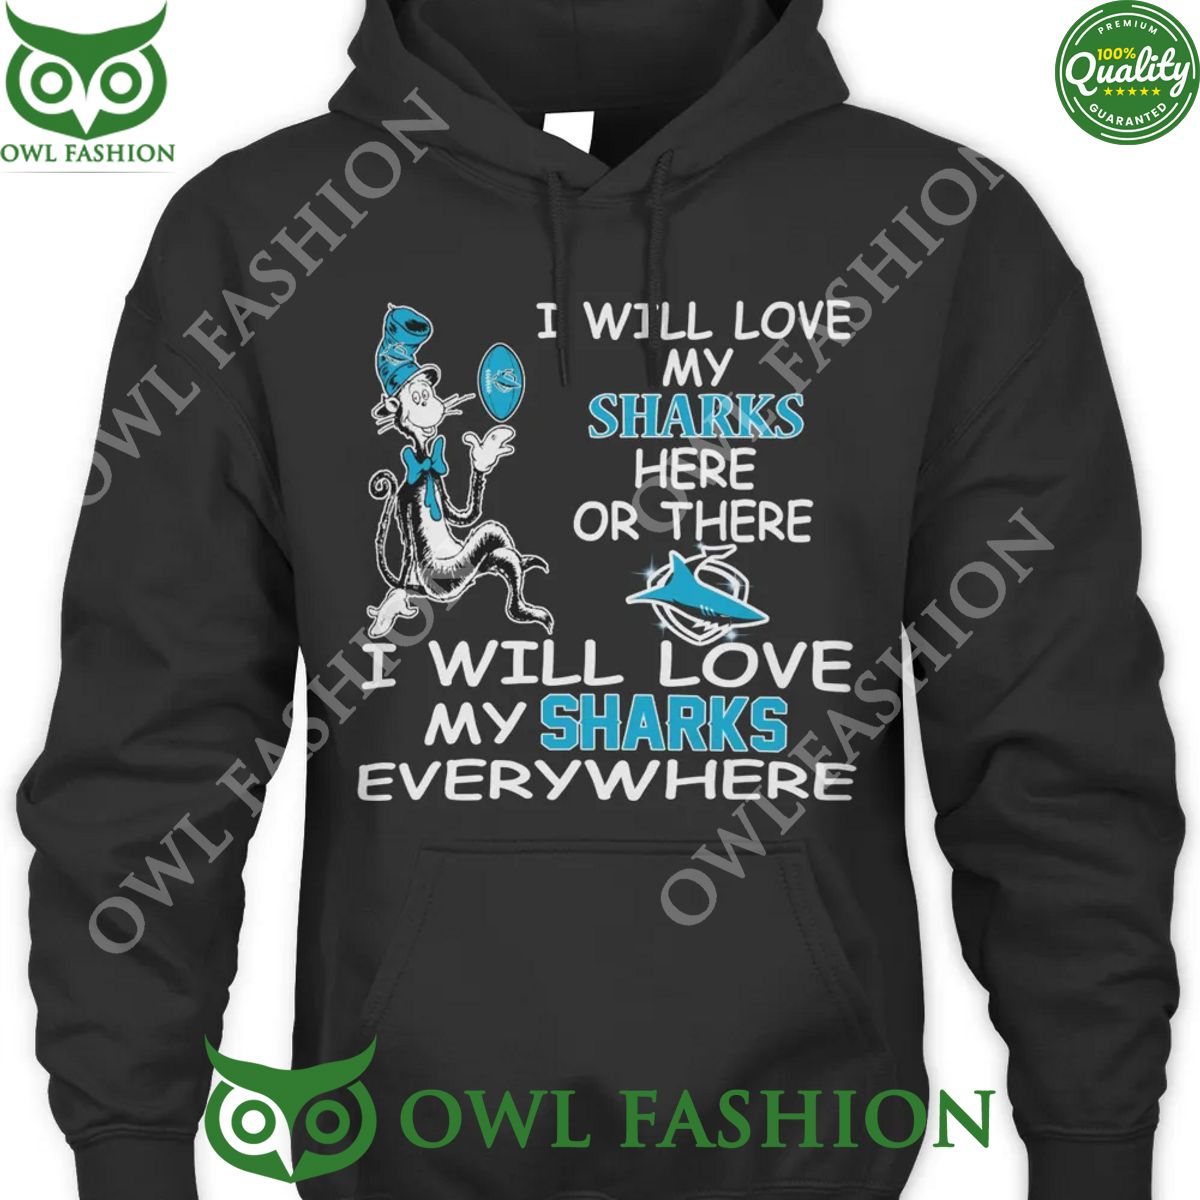 i will love my sharks here or there everywhere cronulla sutherland sharks nrl t shirt 1 KwgW4.jpg